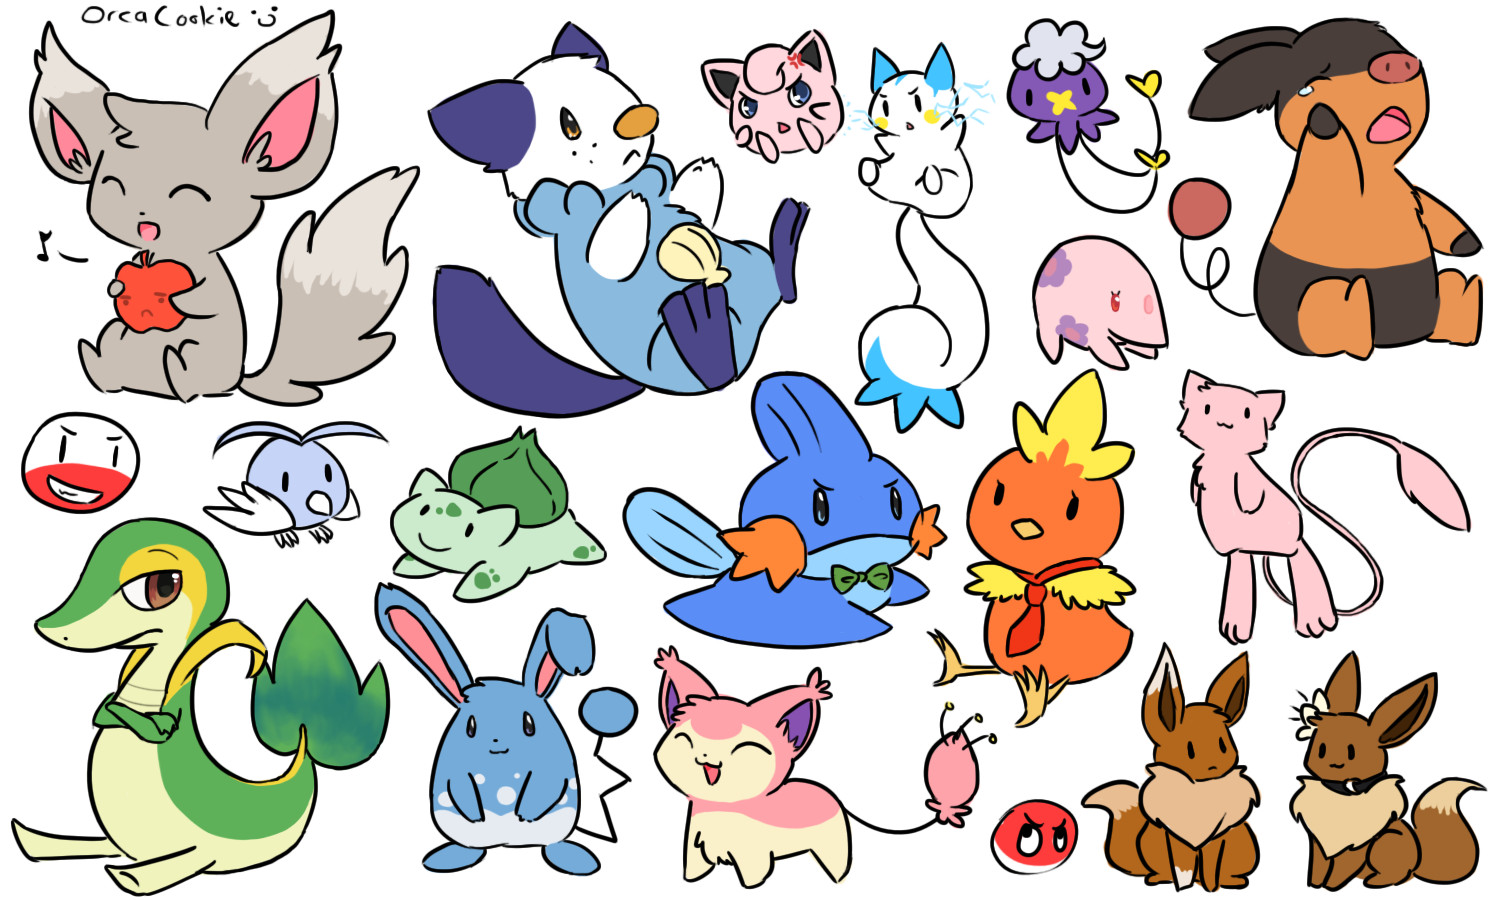 random pokemon doodles by OrcaCookie on DeviantArt